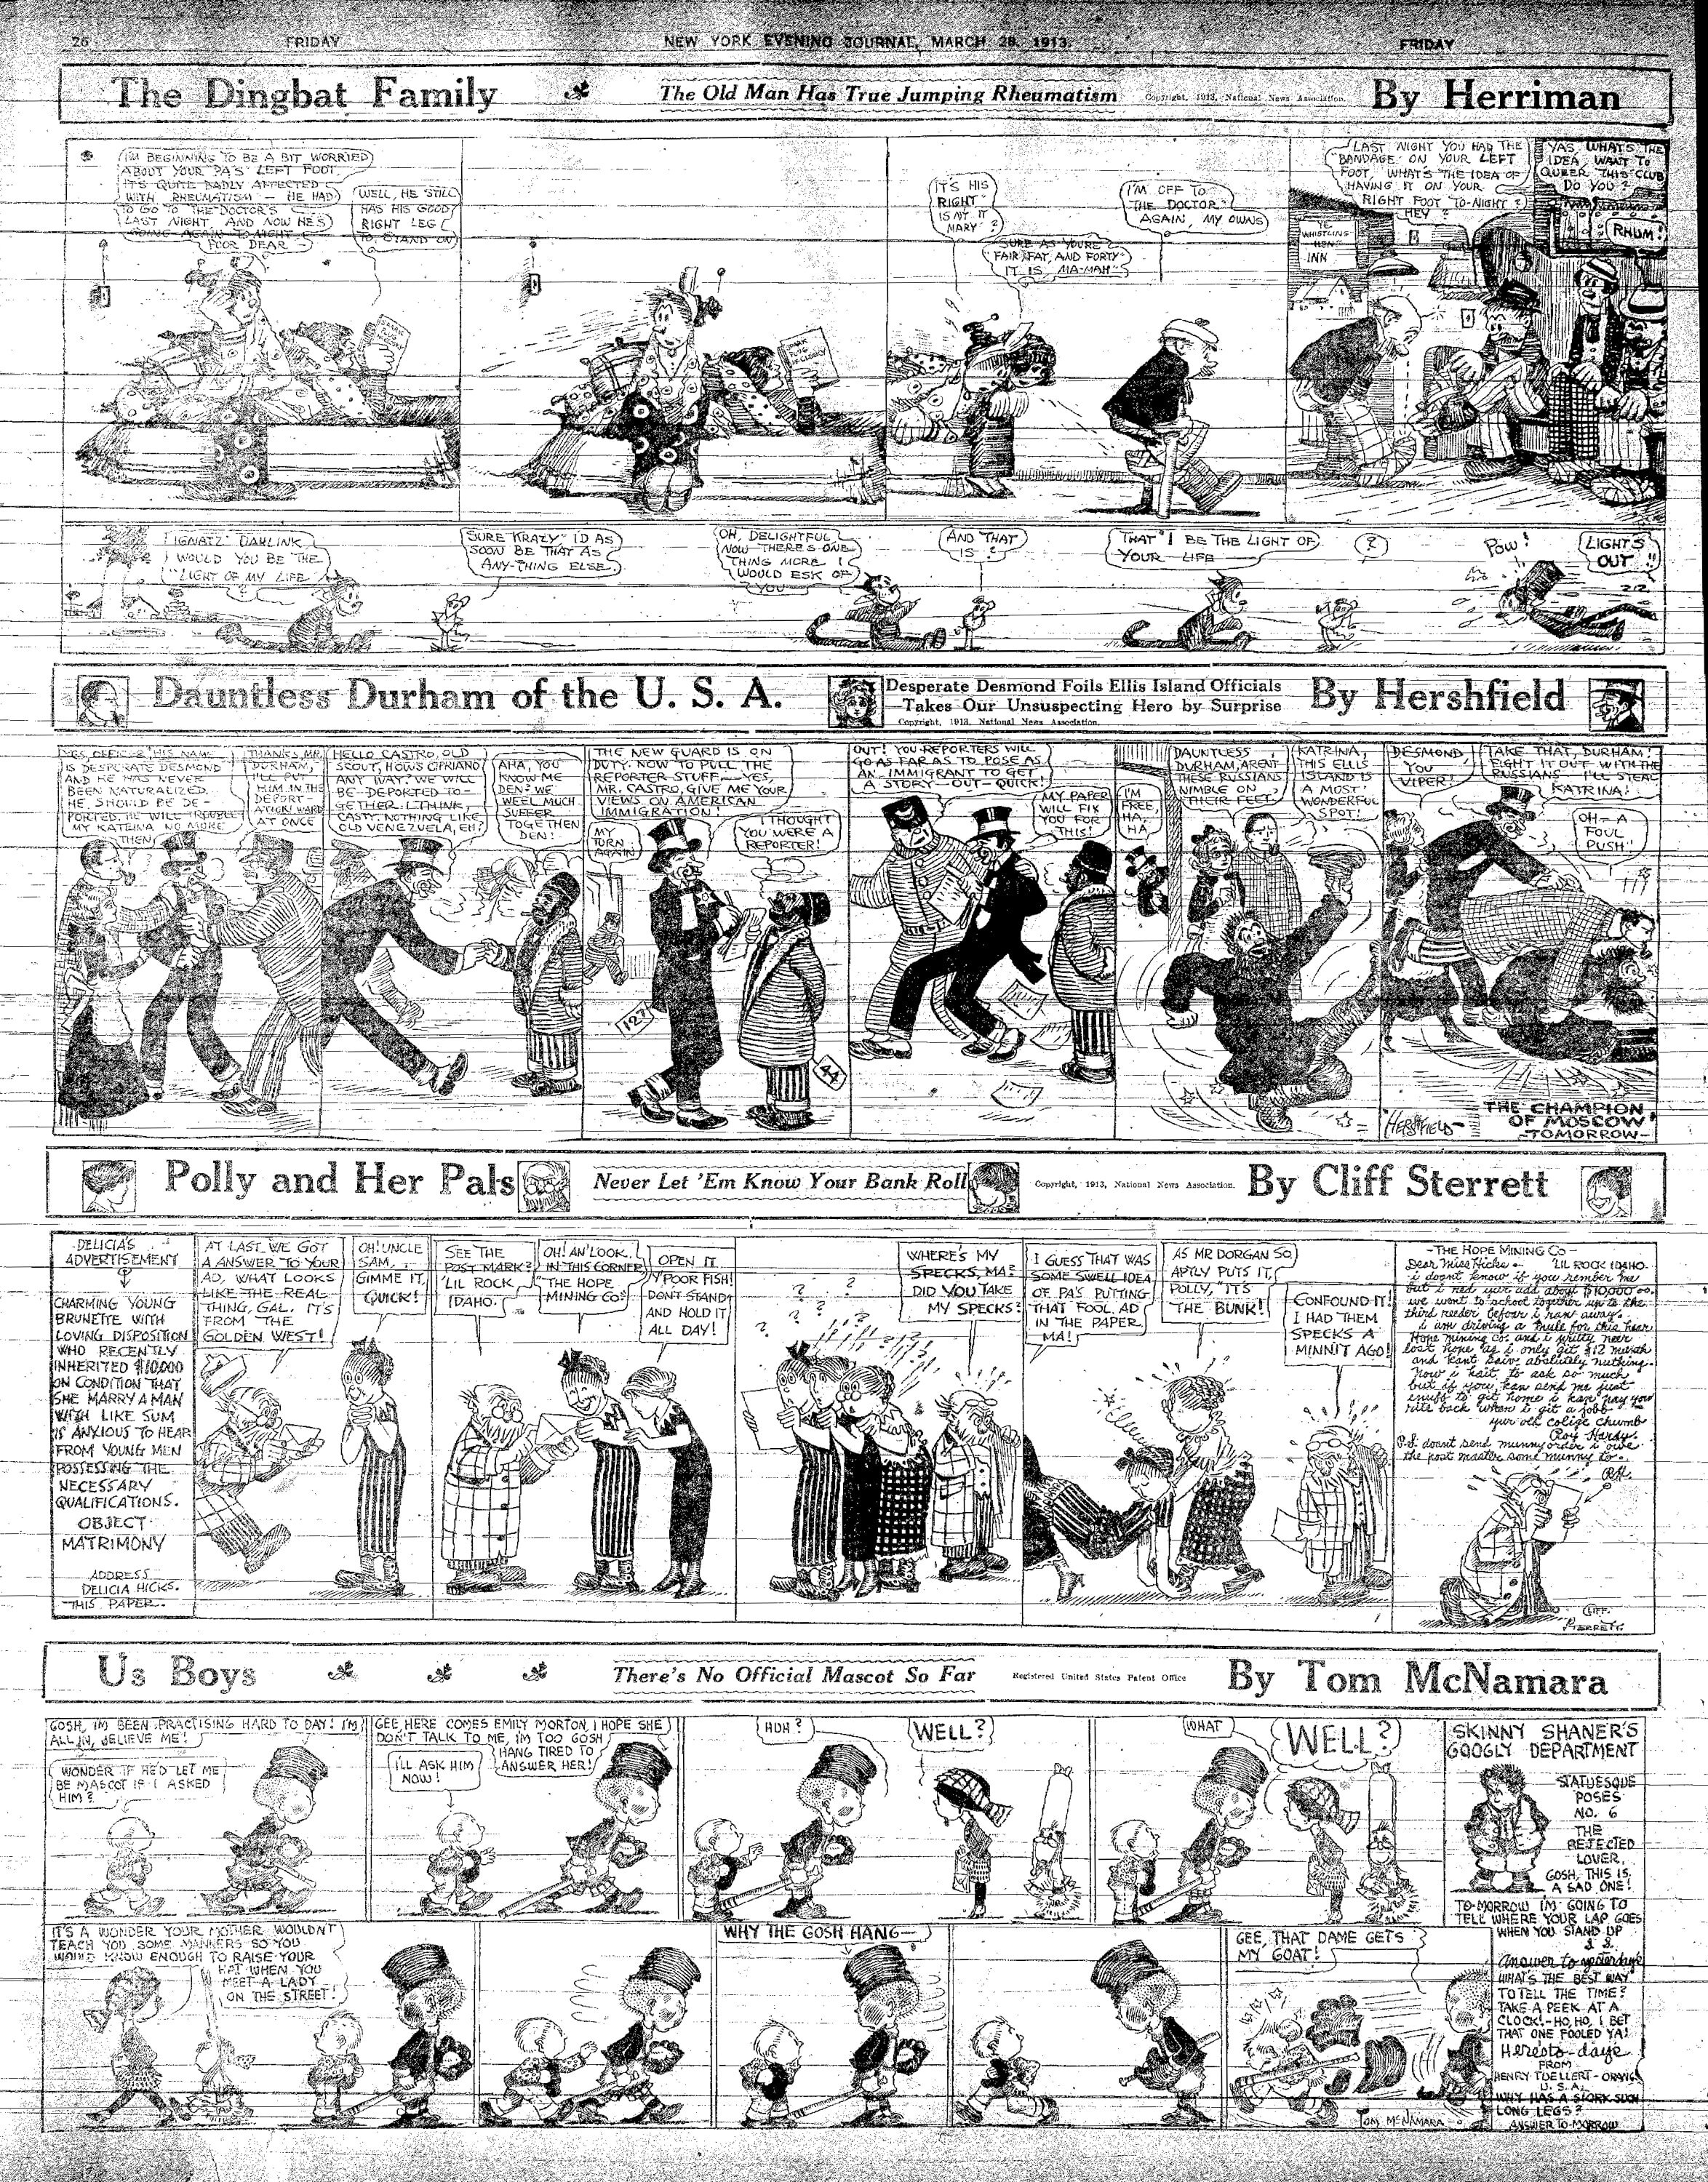 14-1913-03-28-nyej-comics-page-including-rheumatism-gag.jpg